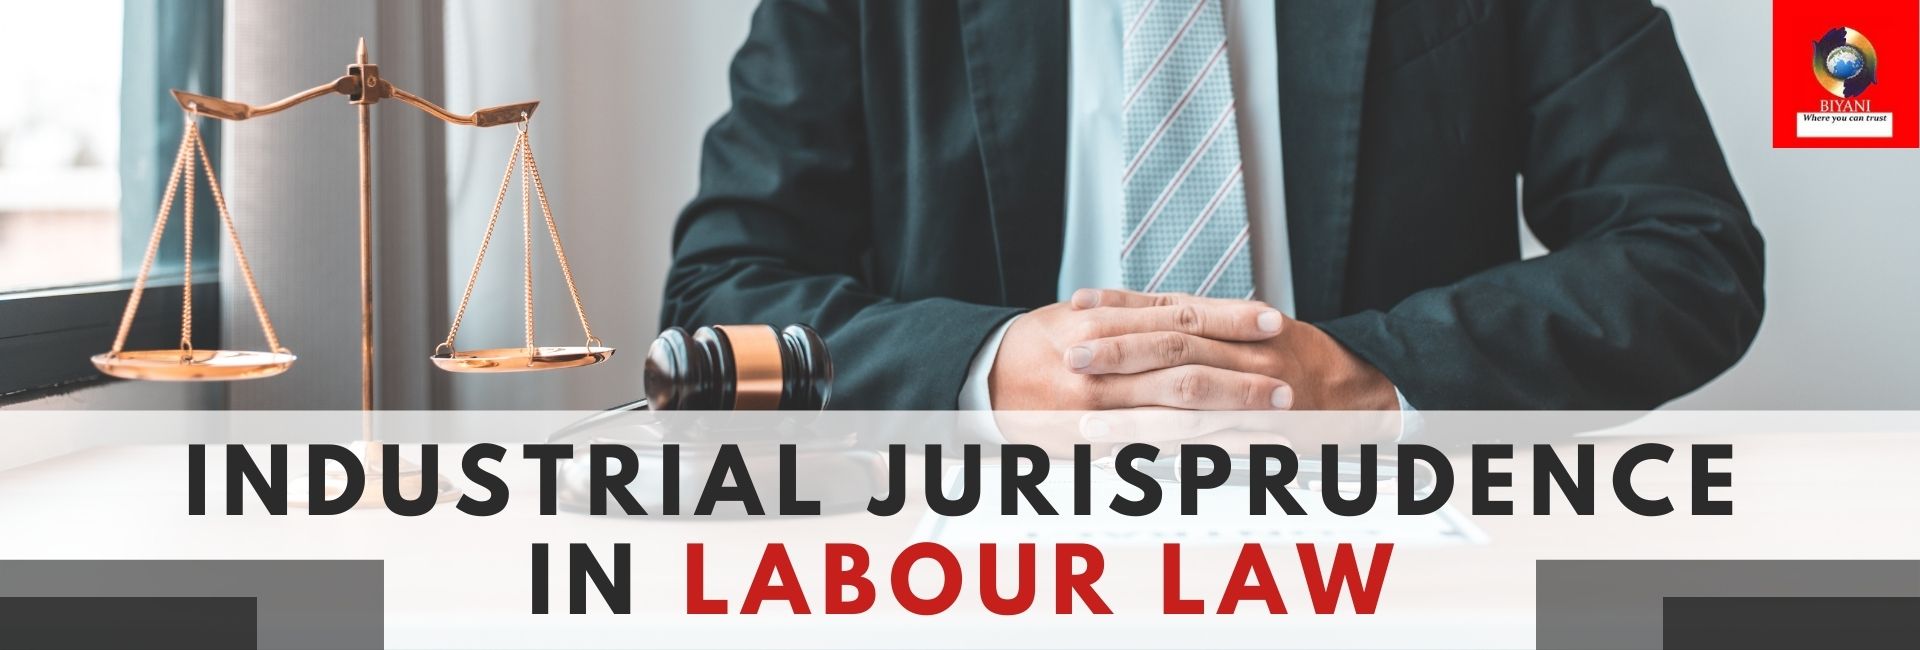 industrial jurisprudence in labour law